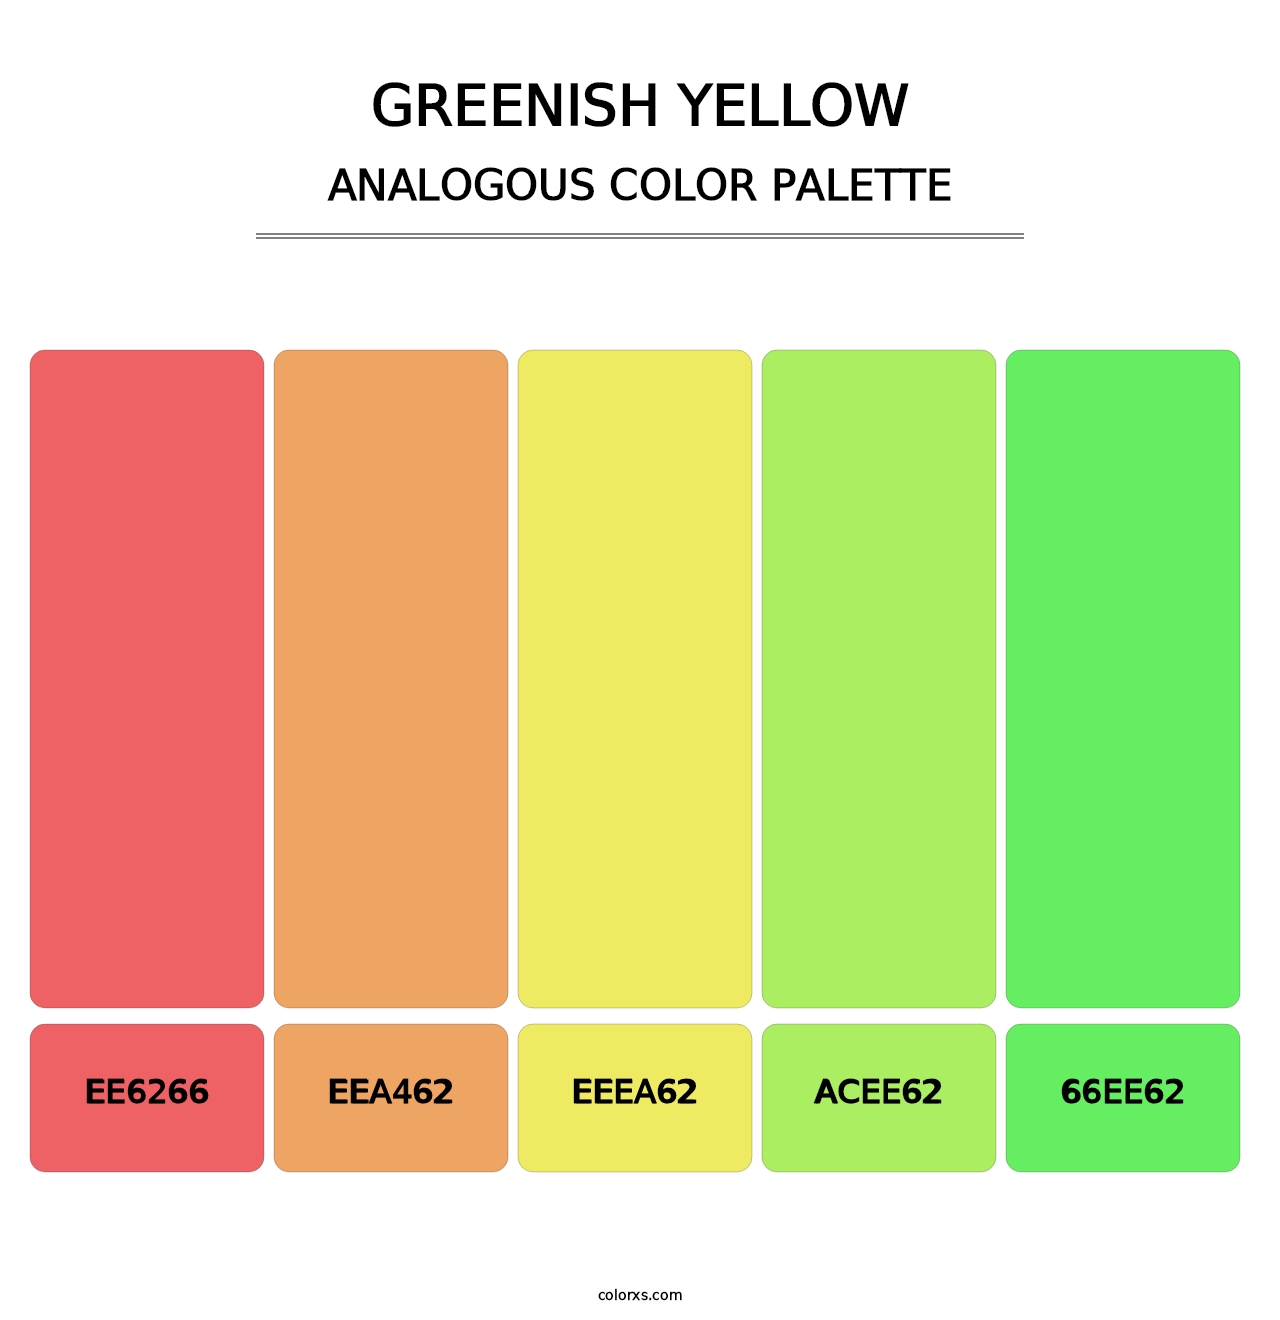 Greenish Yellow - Analogous Color Palette